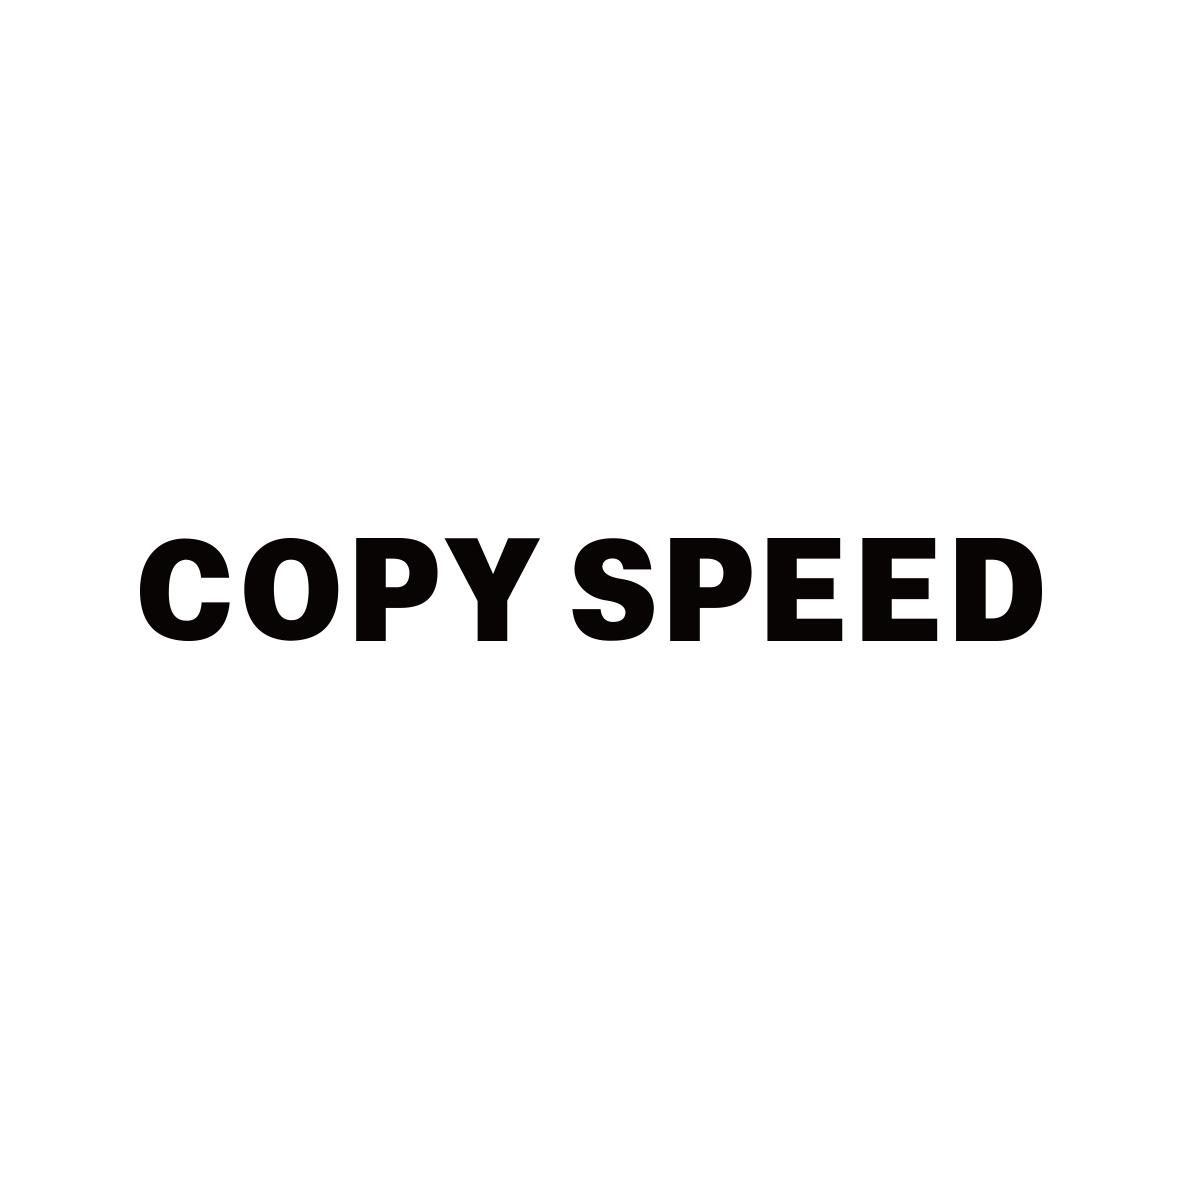 COPY SPEED热敏纸商标转让费用买卖交易流程